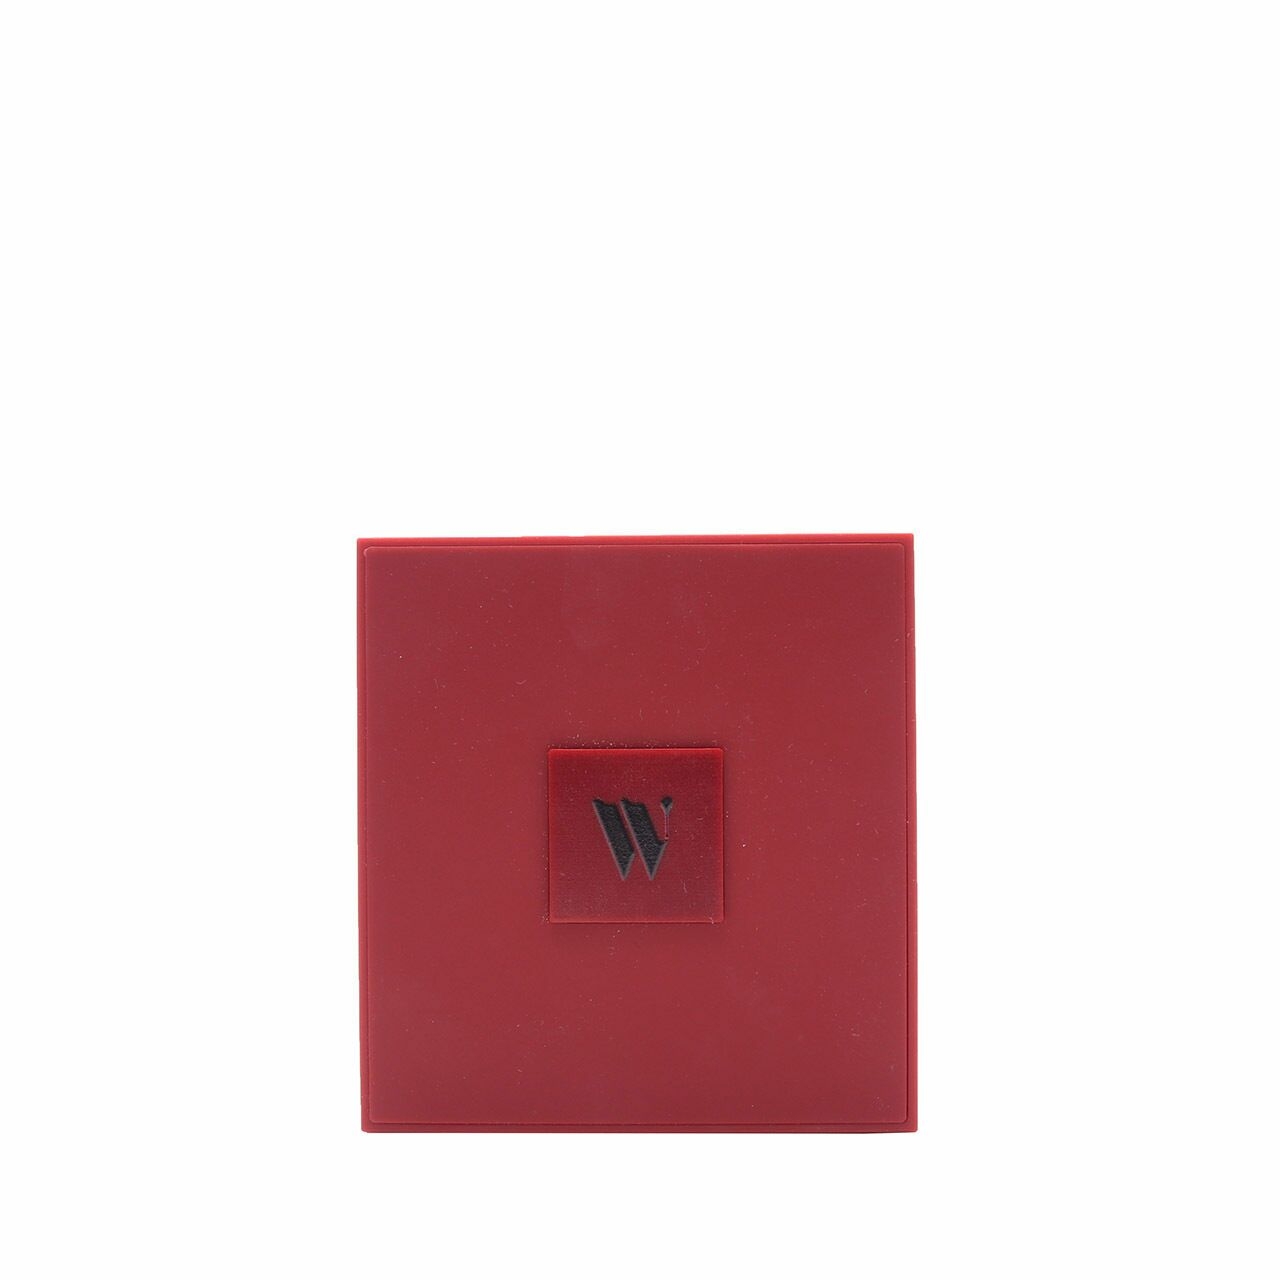 WCKD Liberty Face Palette - 02 Deep Neutrals Sets and Palette